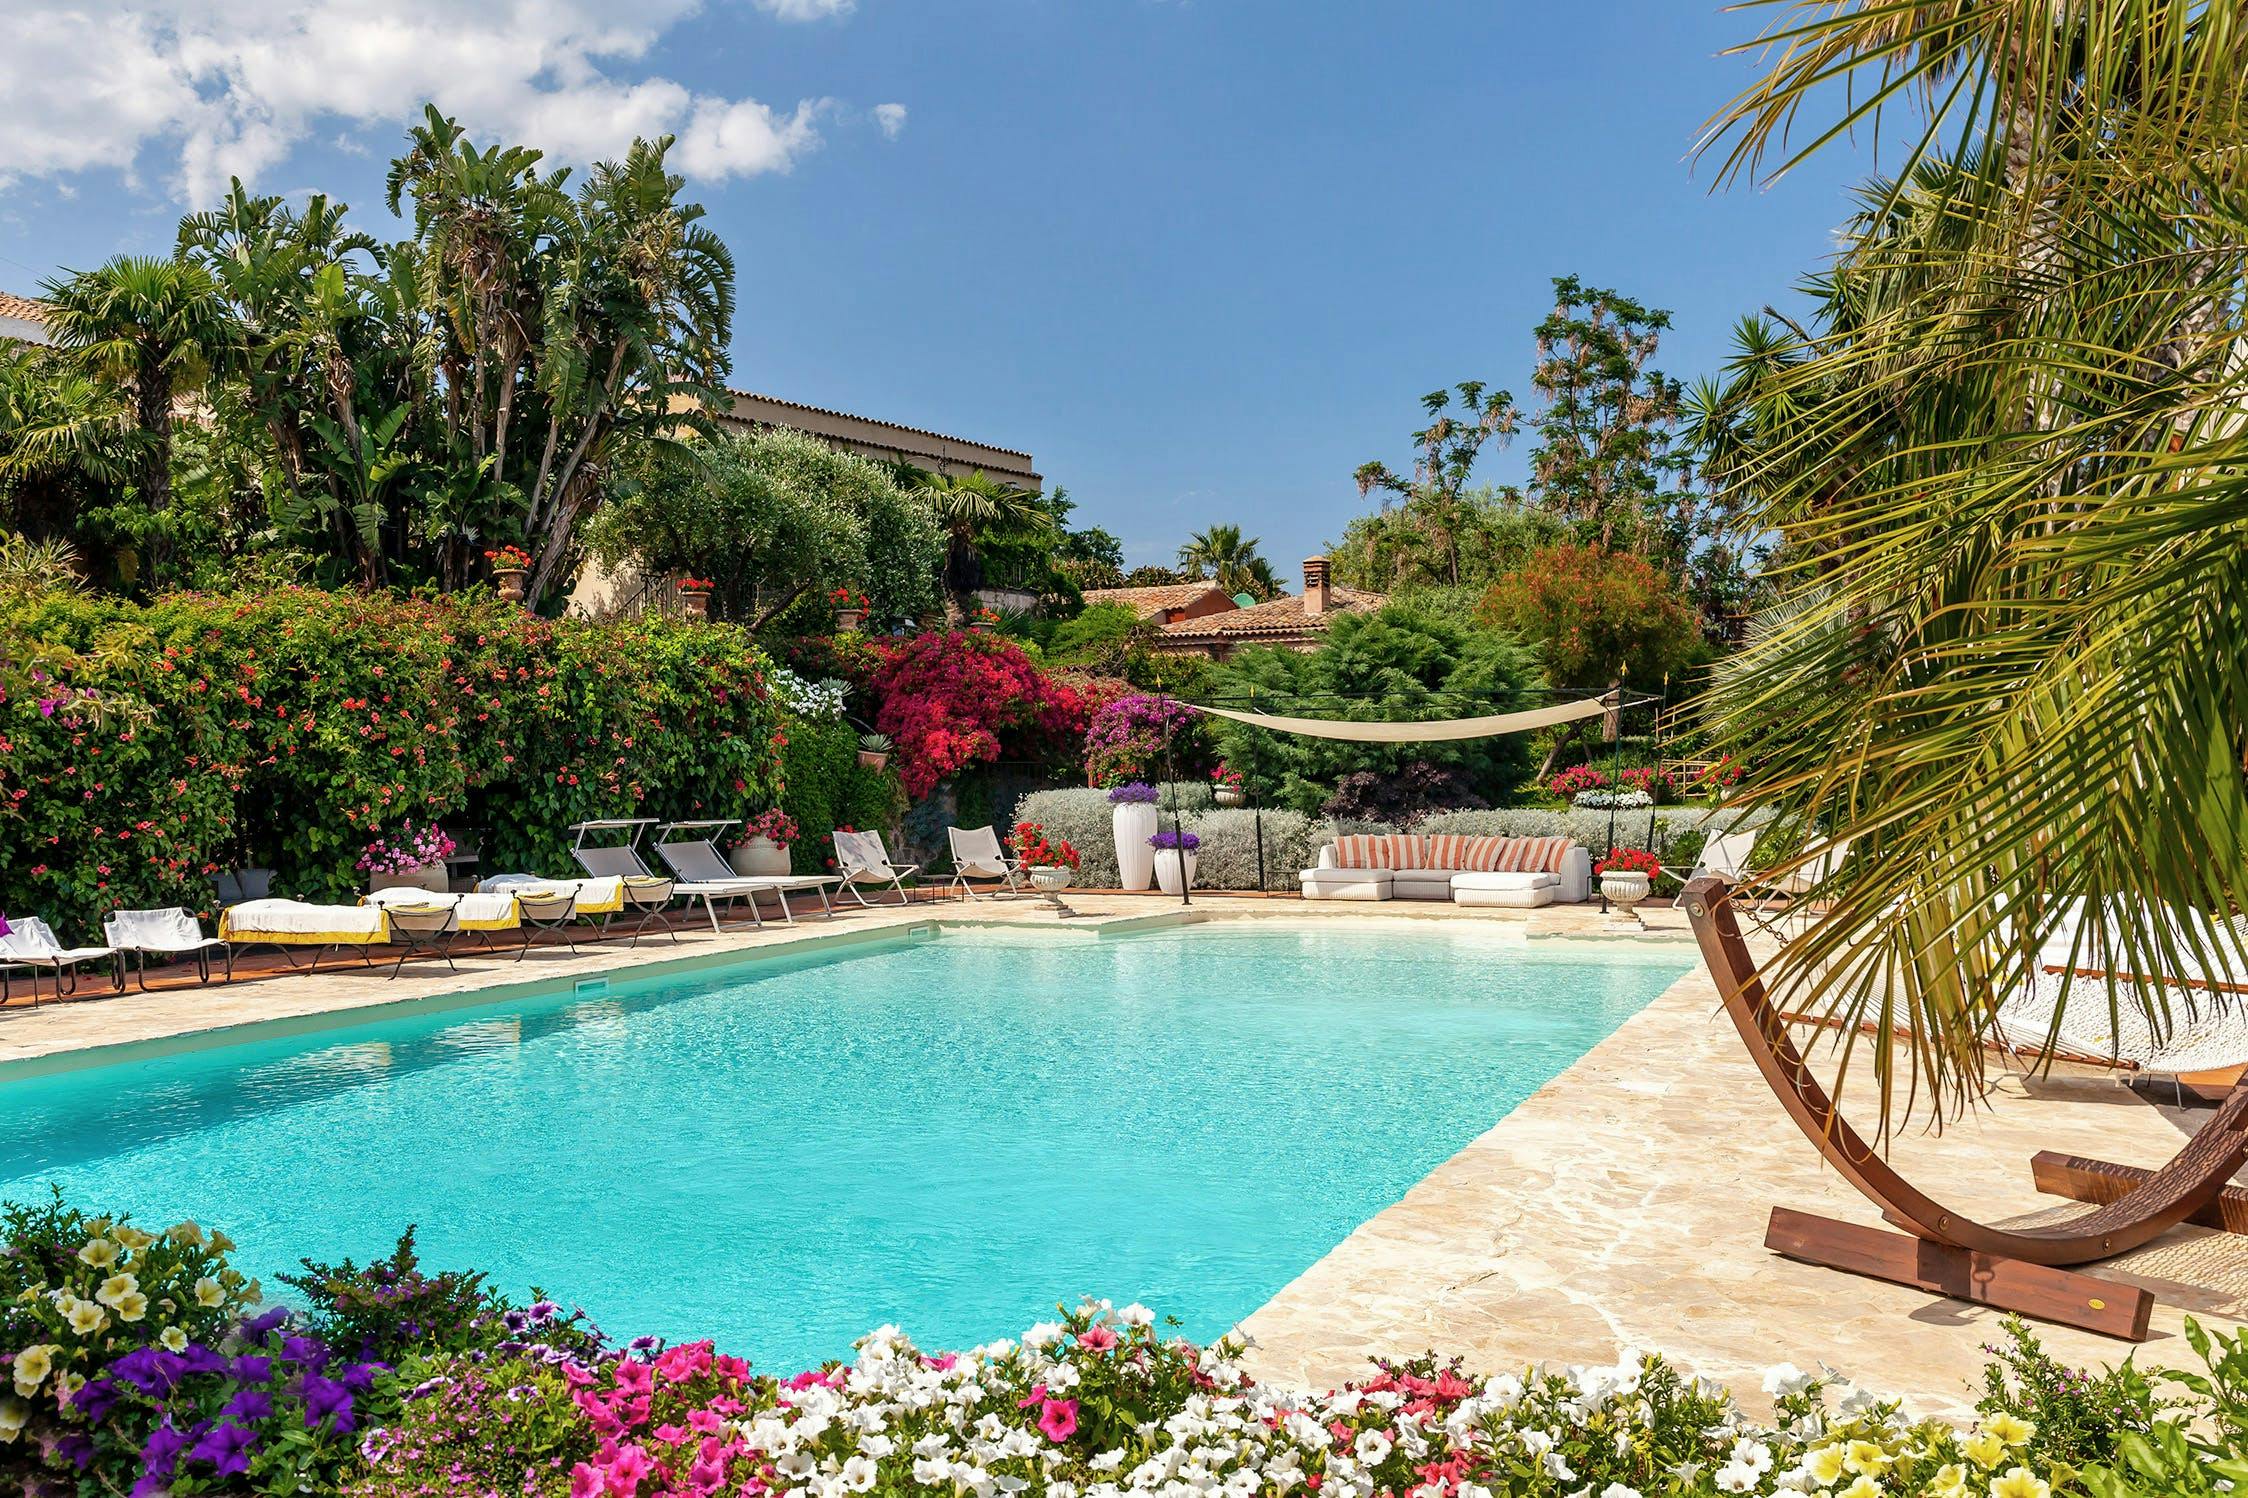 summer villa hotel resort garden nature outdoors pool chair swimming pool